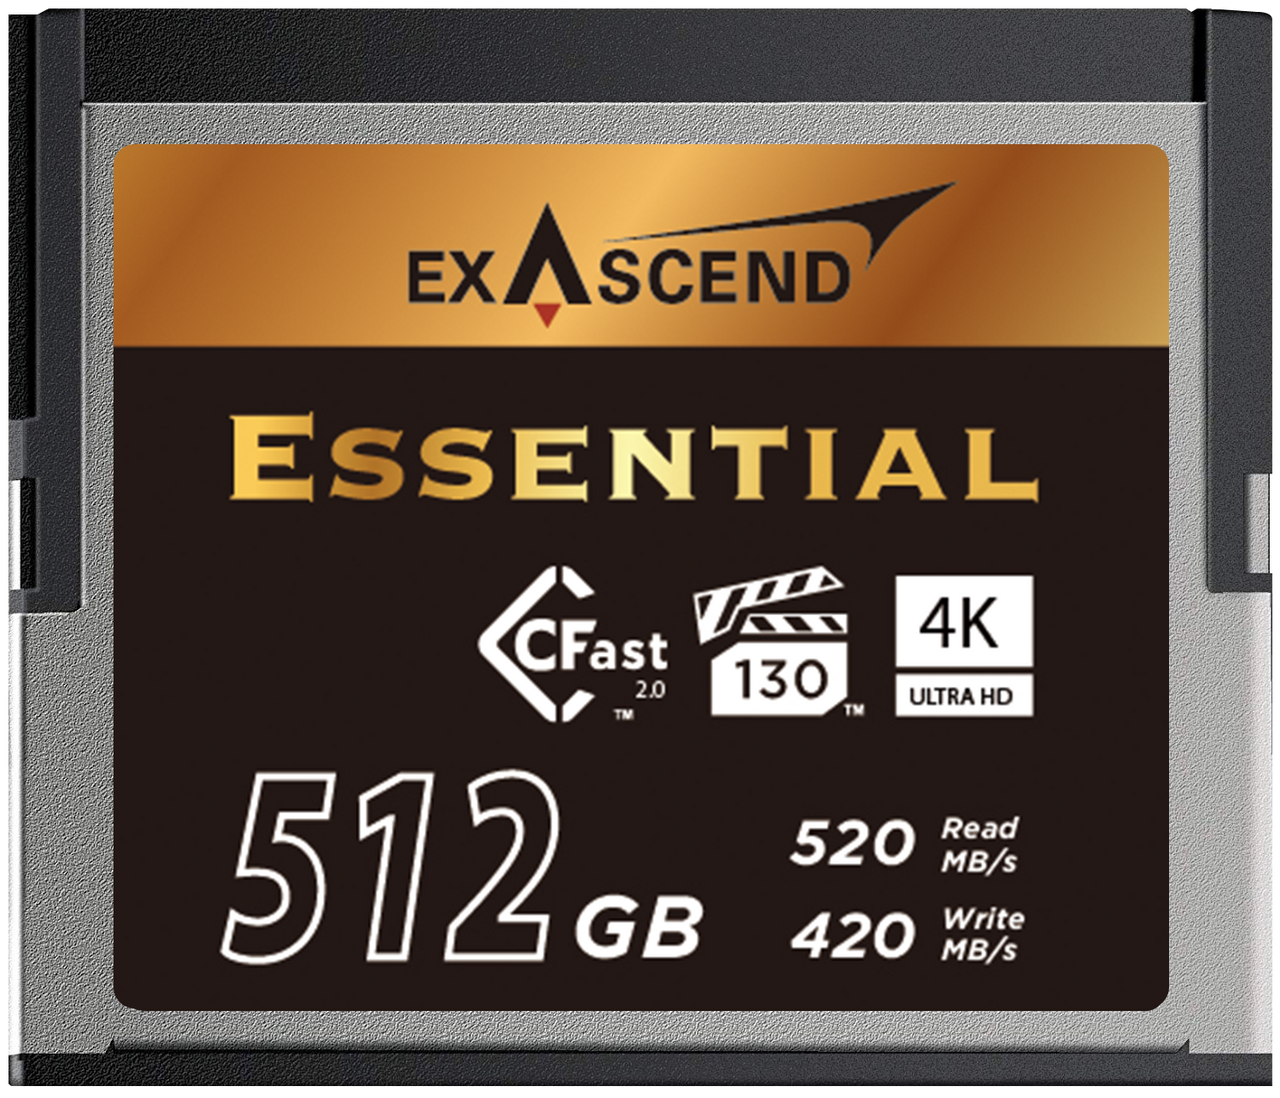 Exascend CFast 2.0 : Essential Series (512 GB)